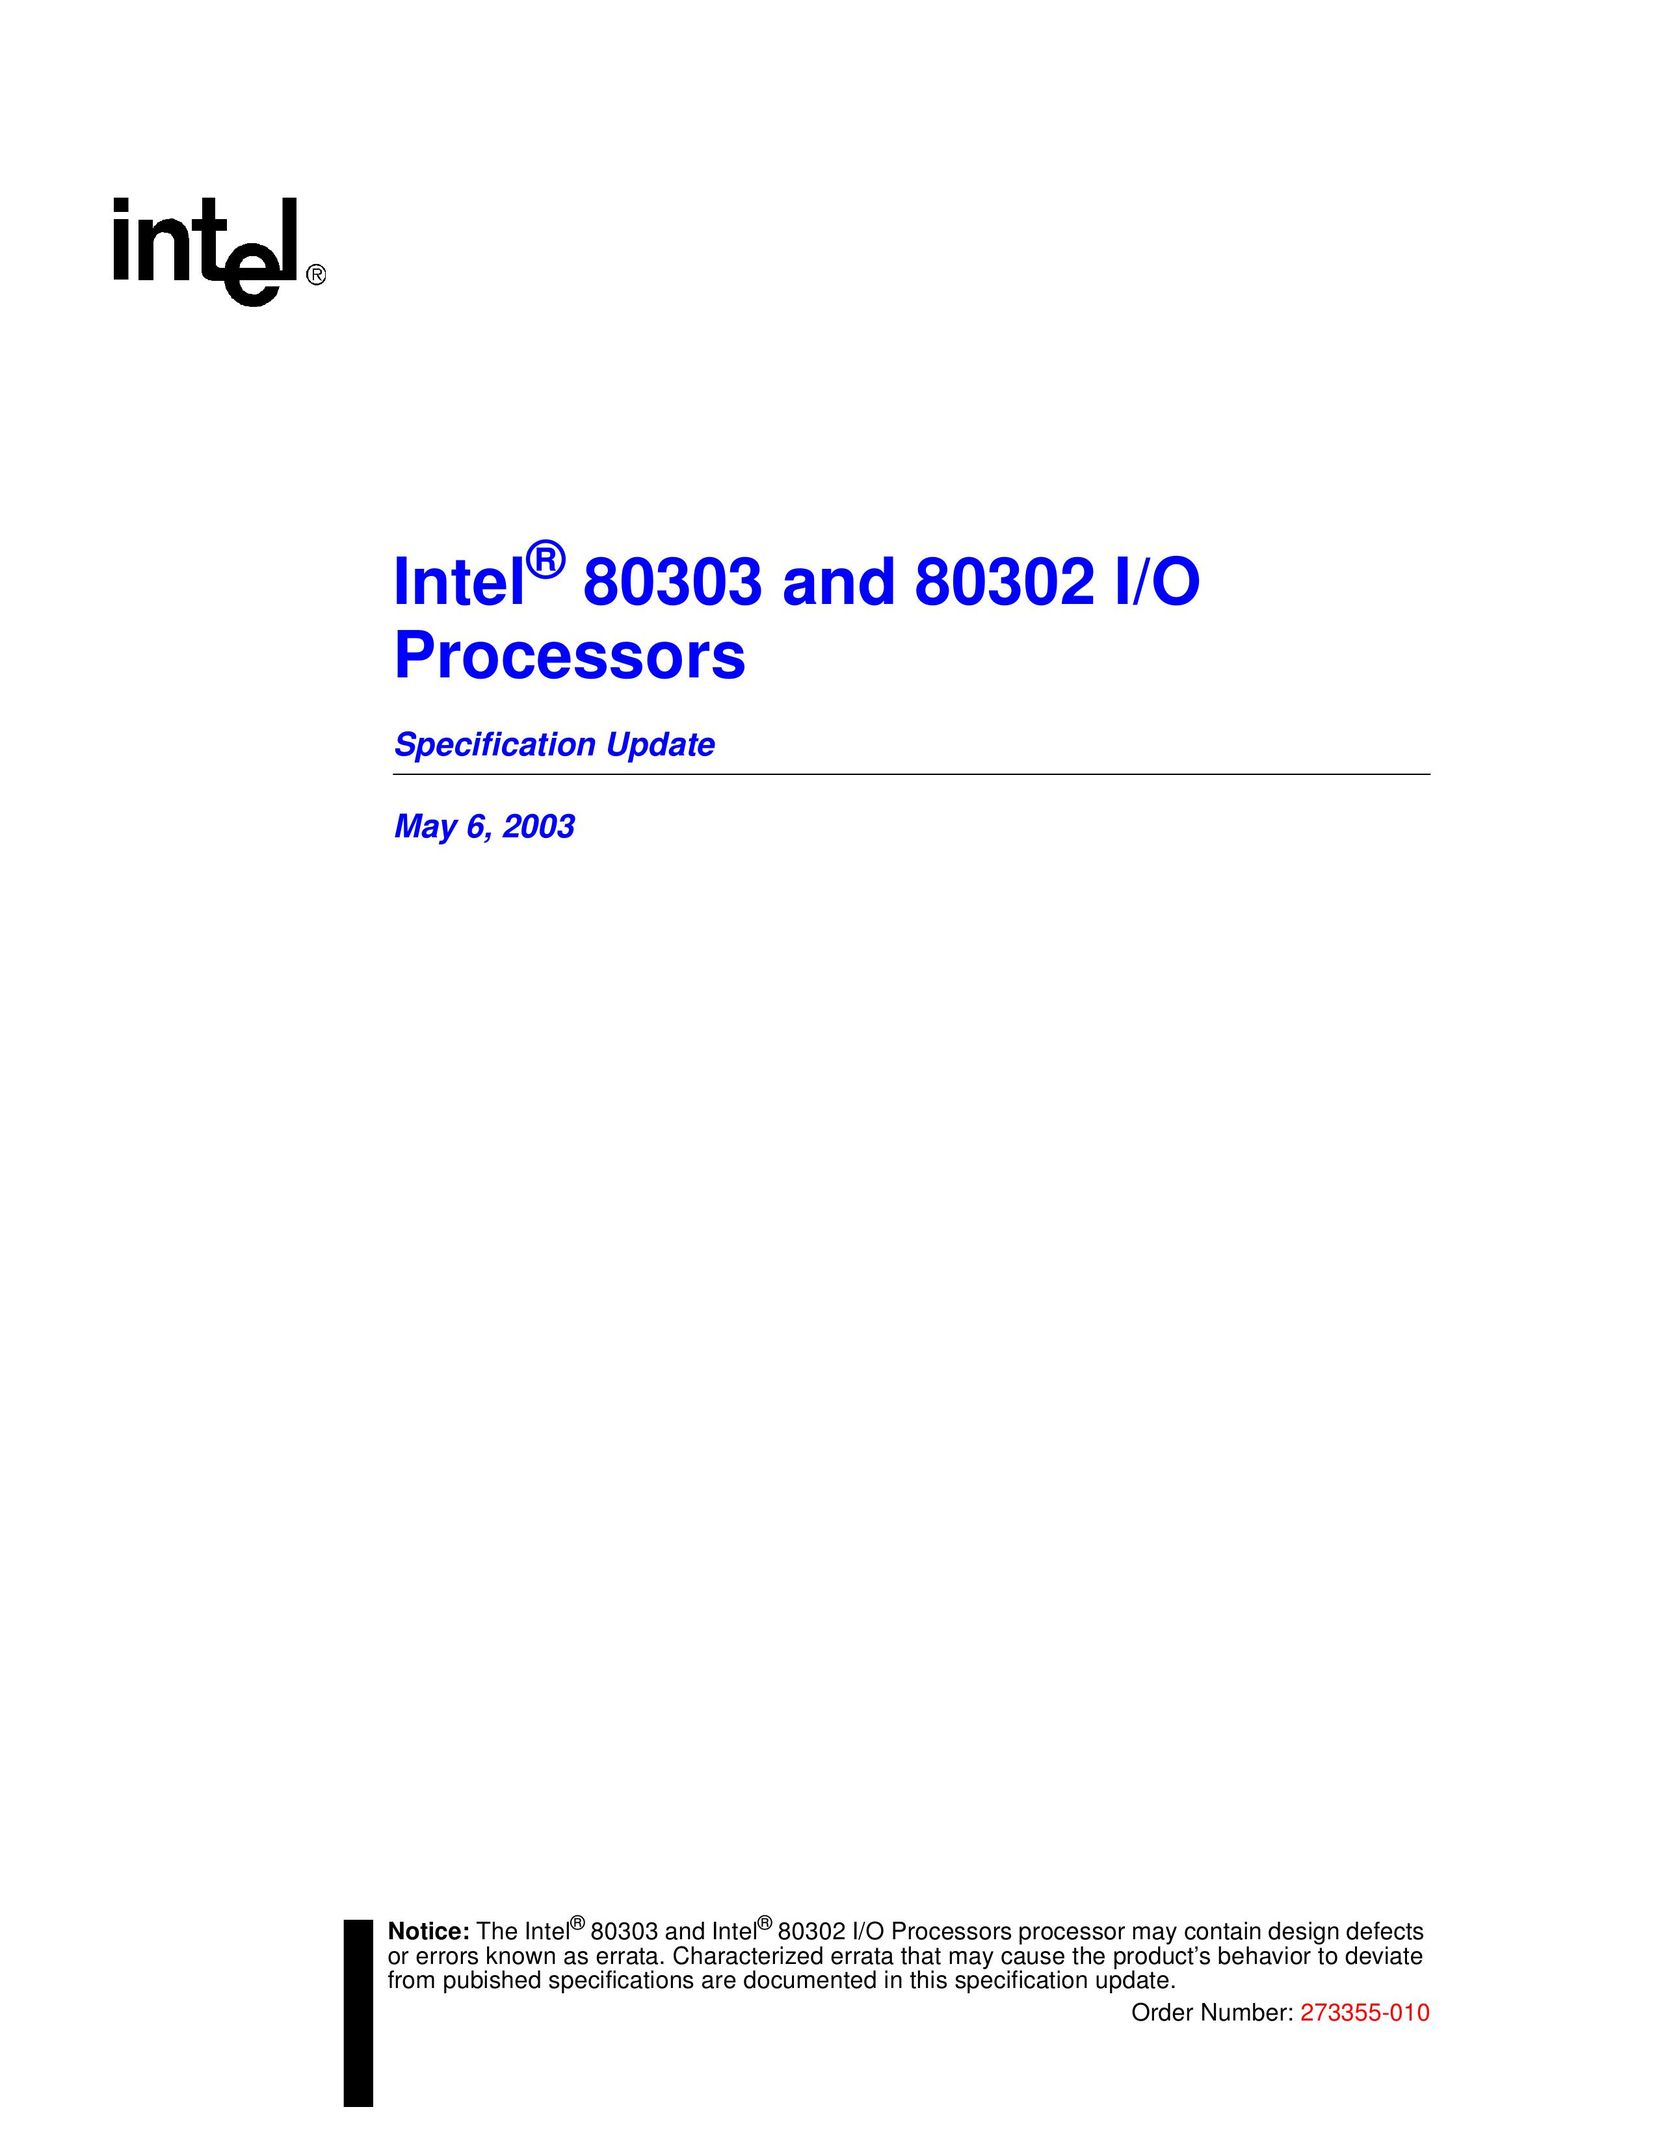 Intel 80302 Computer Hardware User Manual